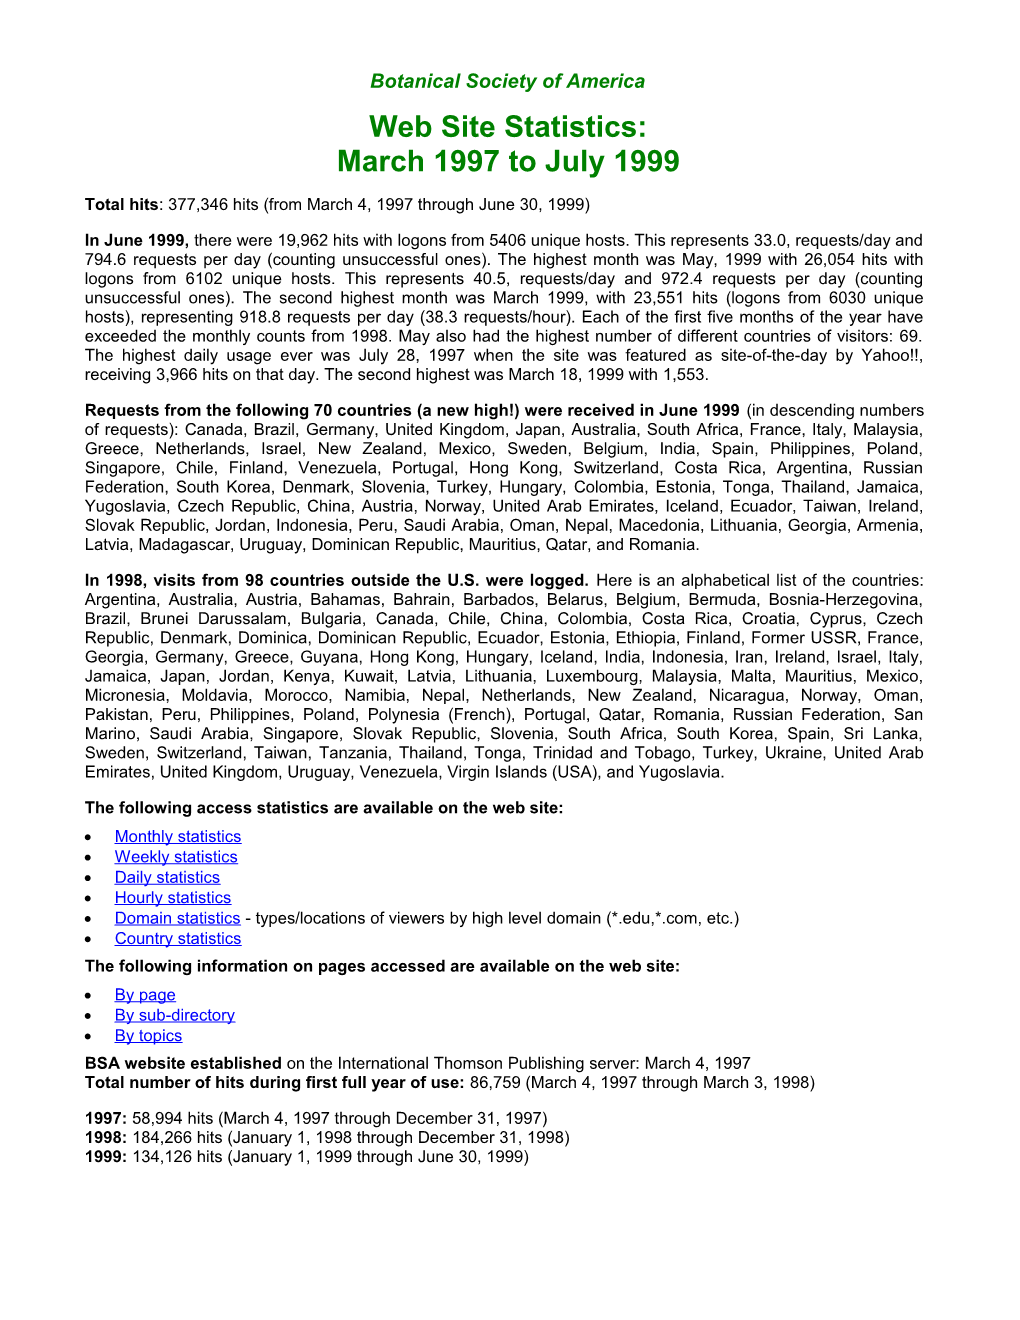 BSA Site: Web Statistics, March 1997 to Present